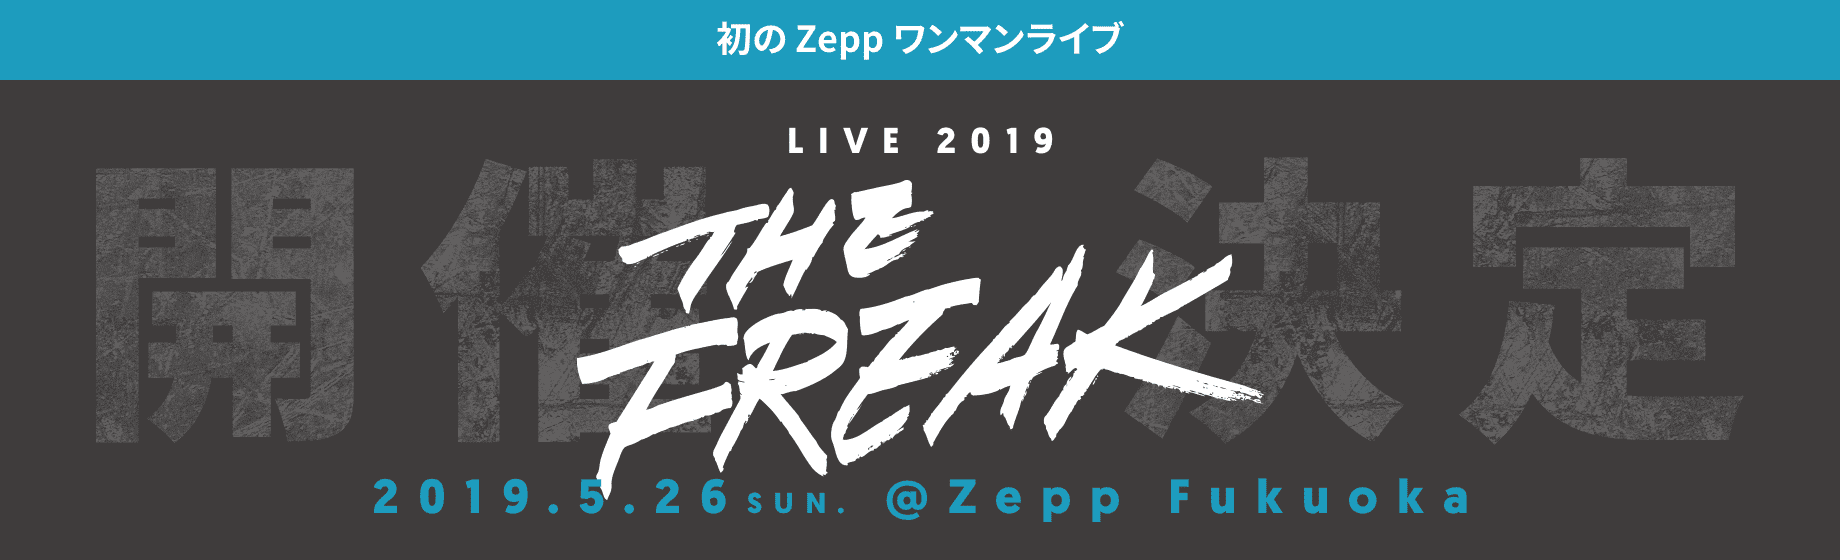 LIVE 2019 THE FREAK 開催決定